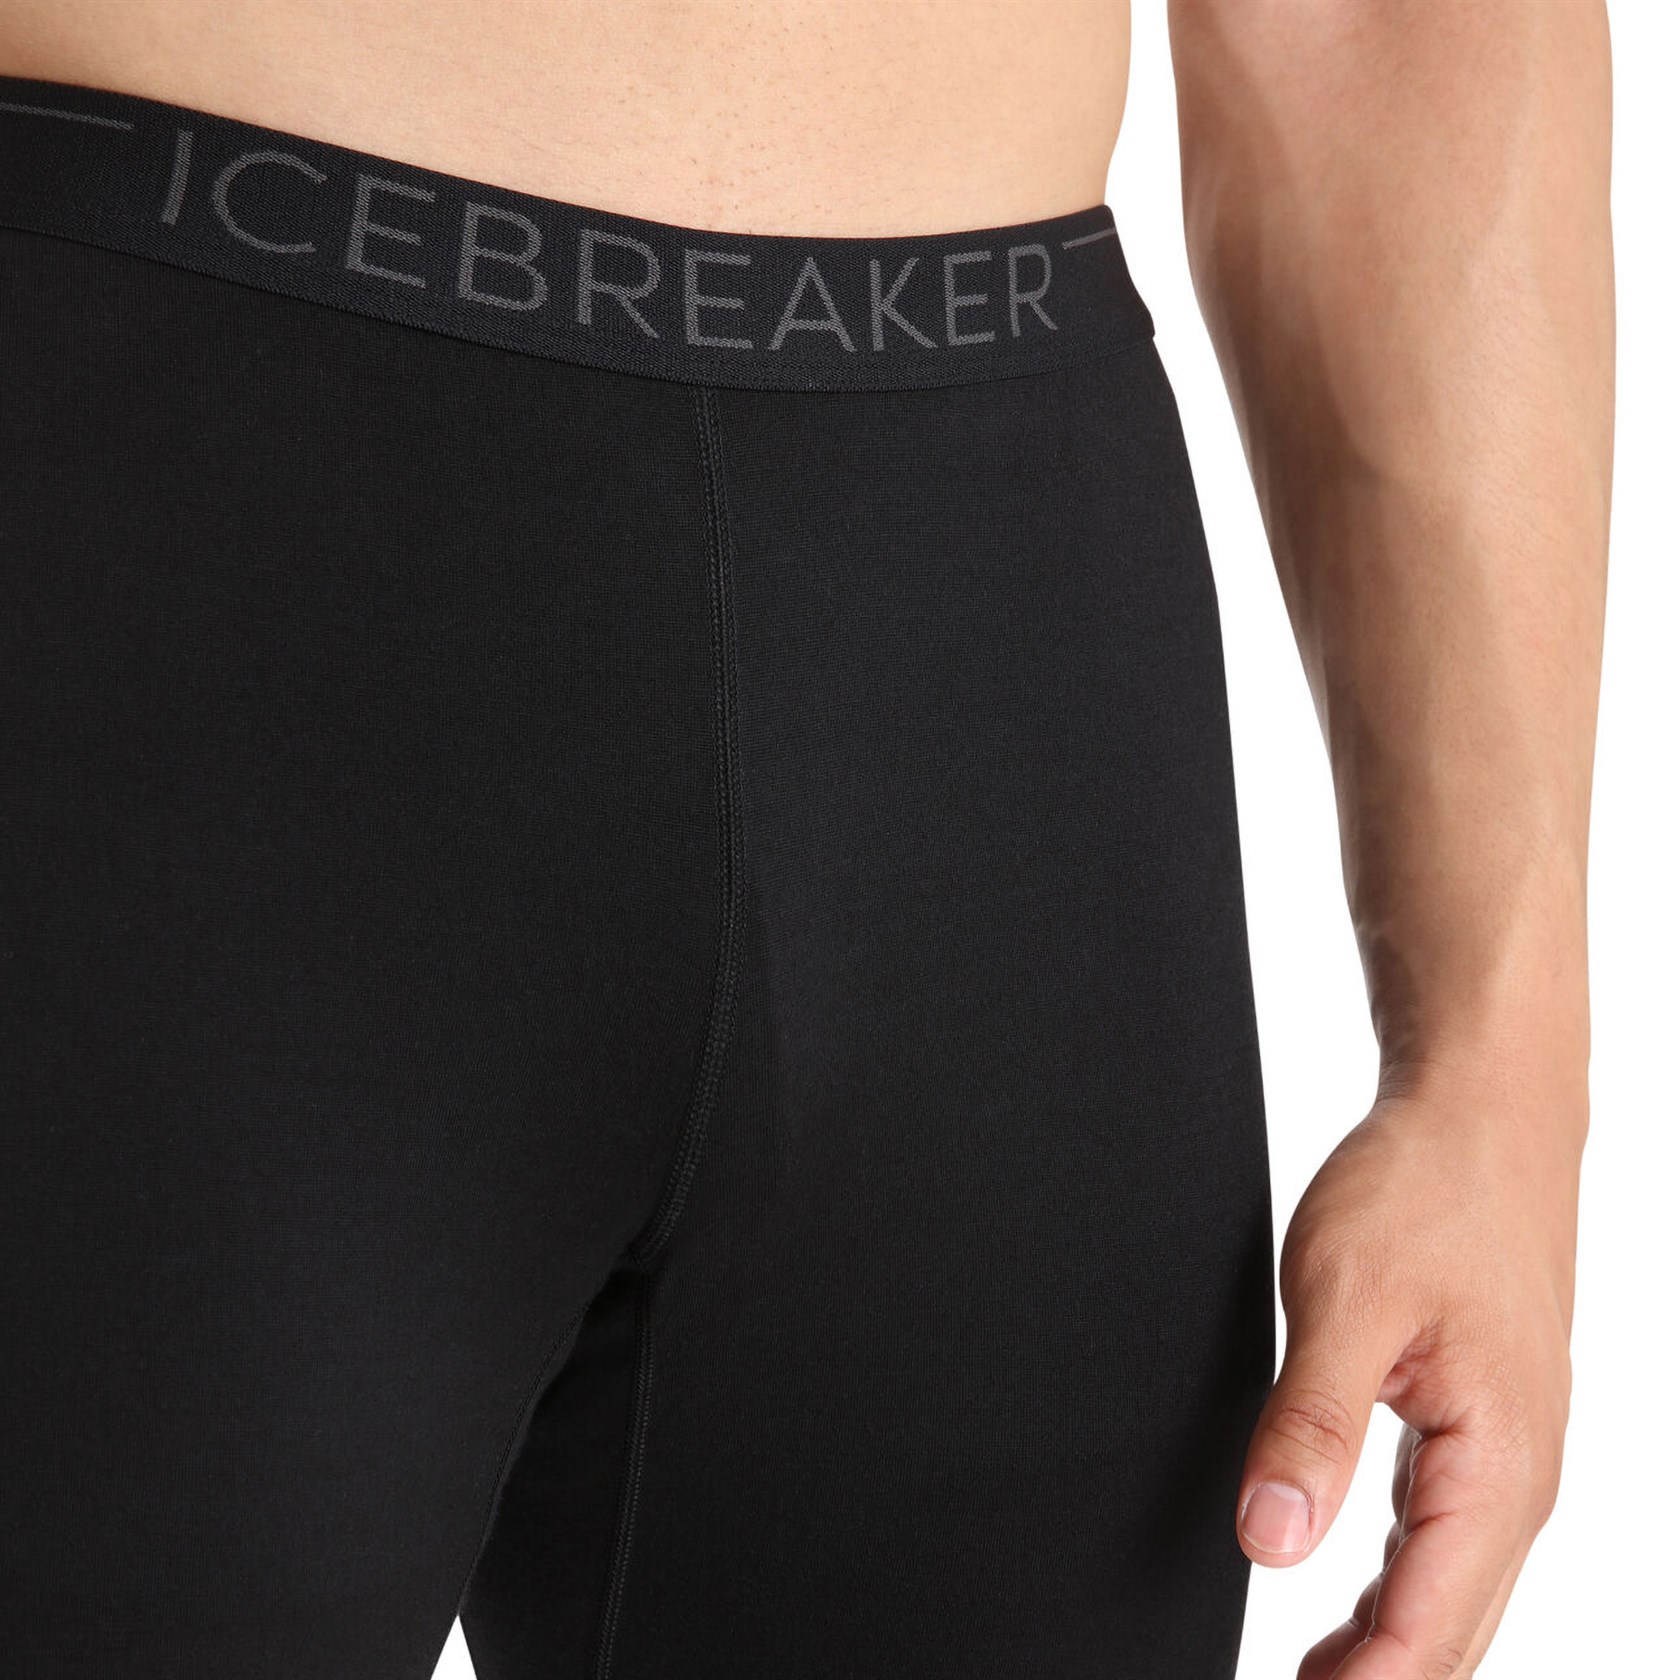 Icebreaker mens merino 260 Tech leggings in black